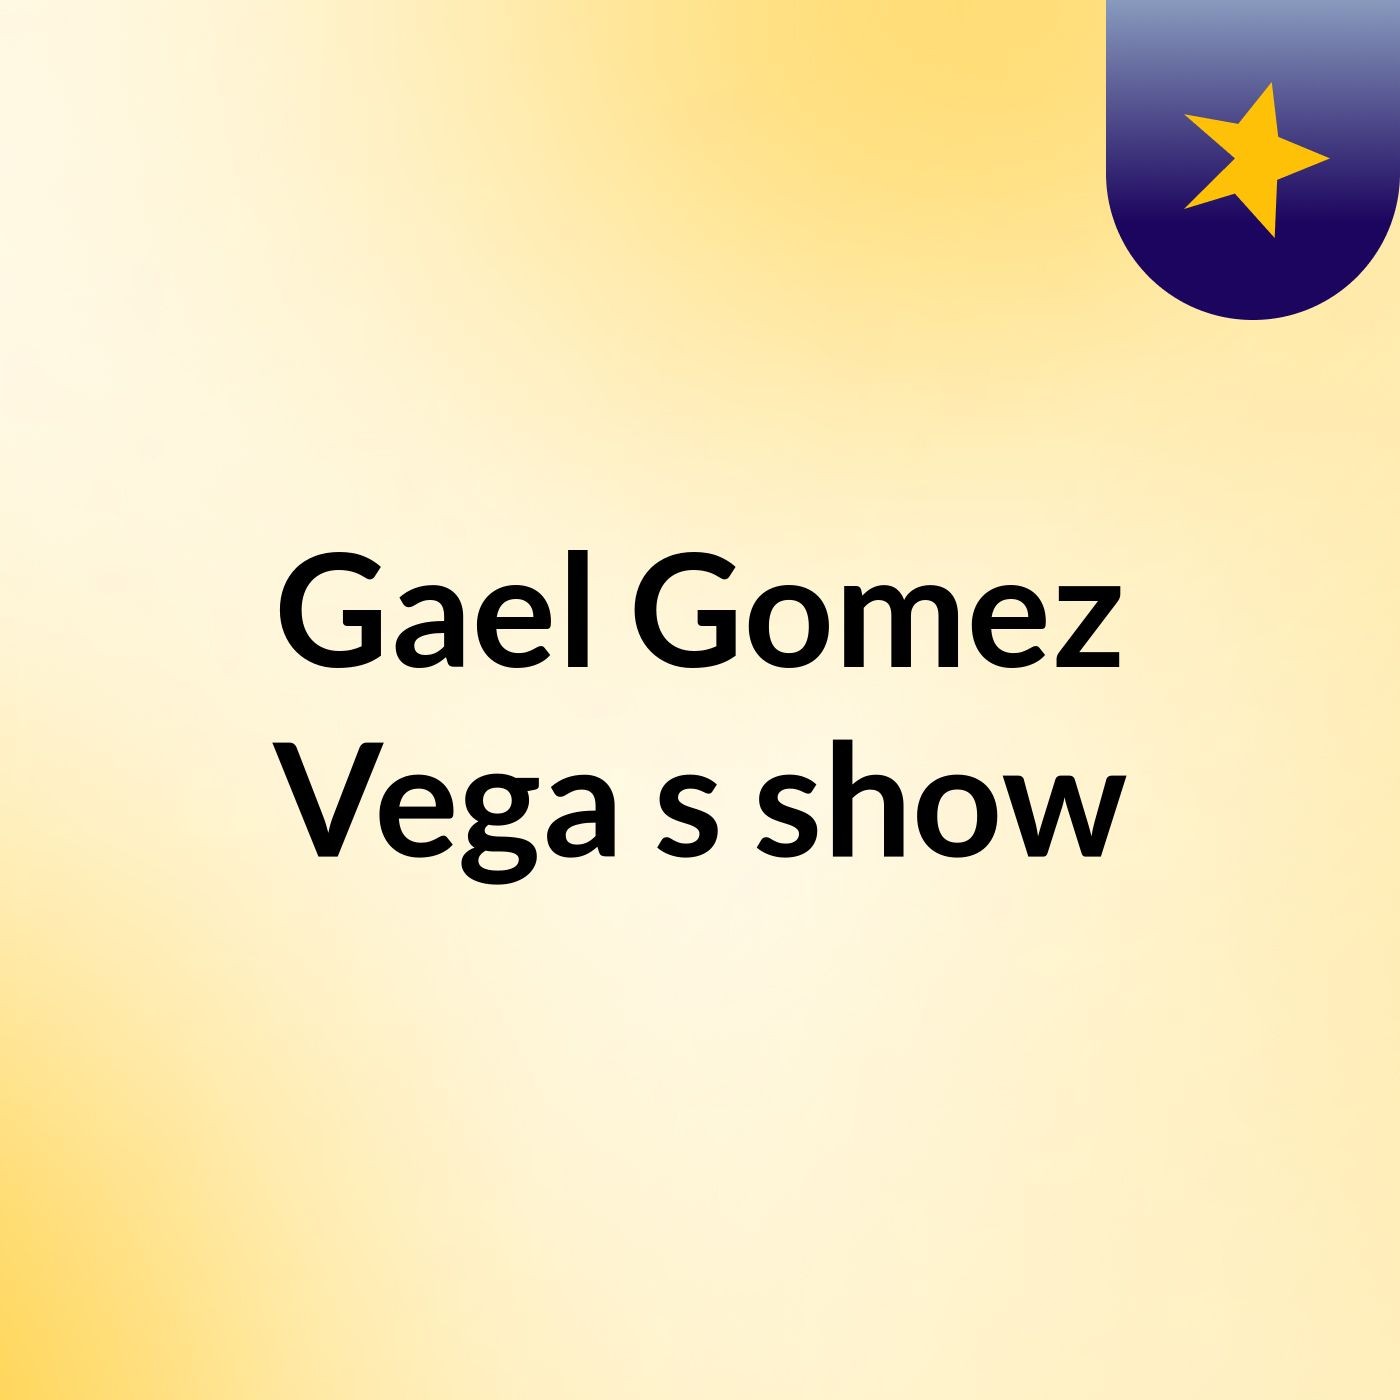 Gael Gomez Vega's show